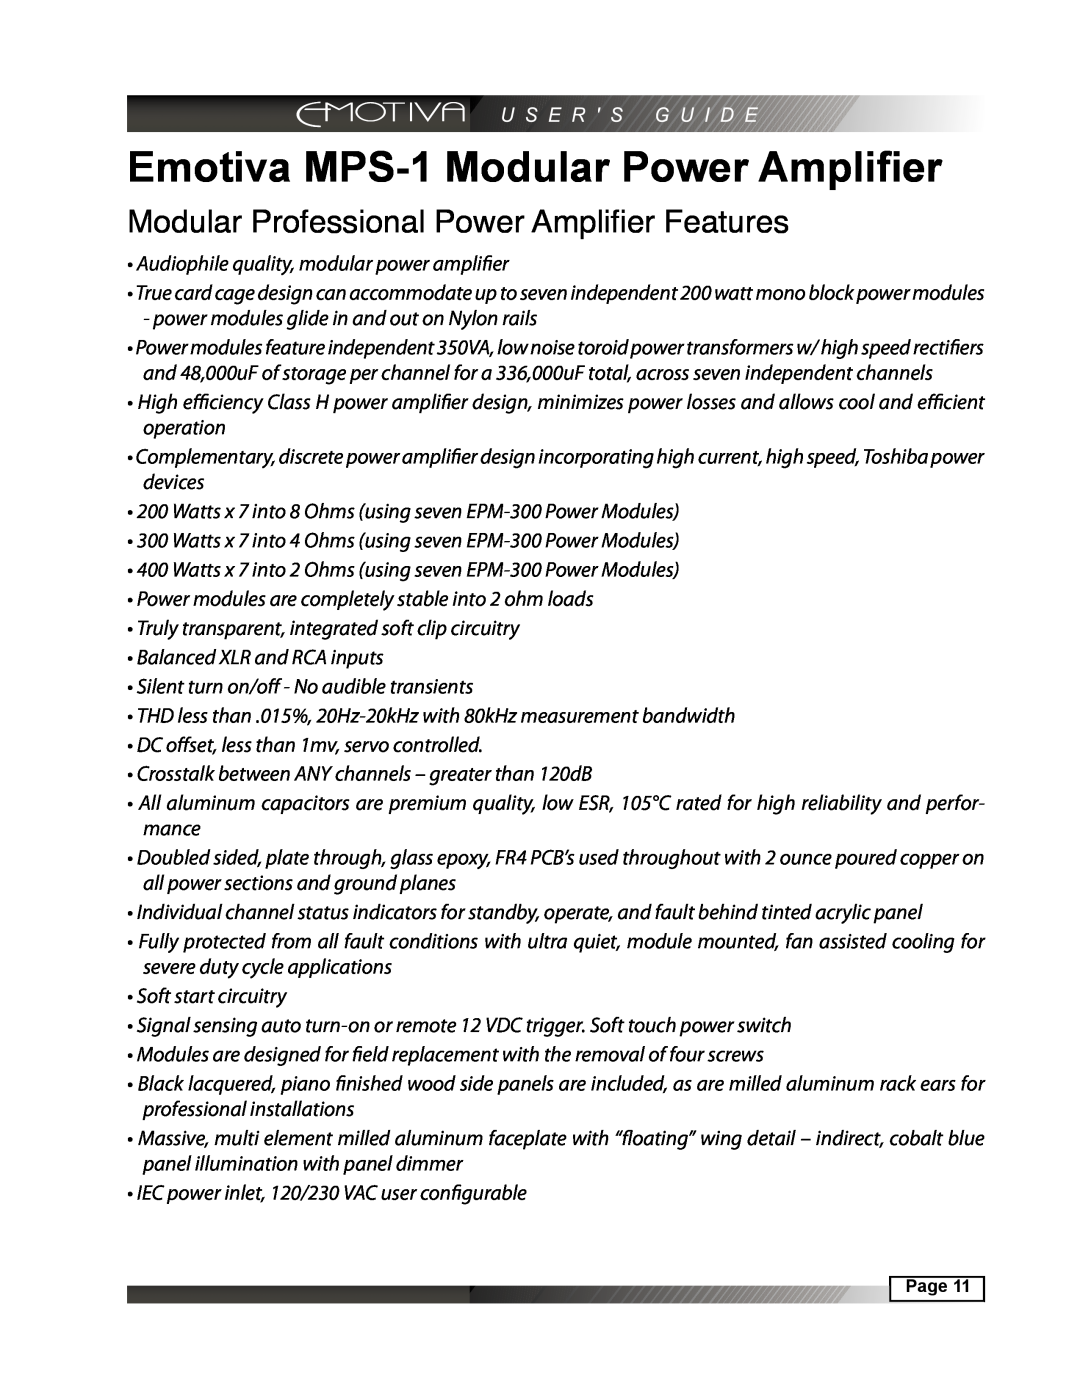 Emotiva manual Emotiva MPS-1Modular Power Amplifier, Modular Professional Power Amplifier Features 